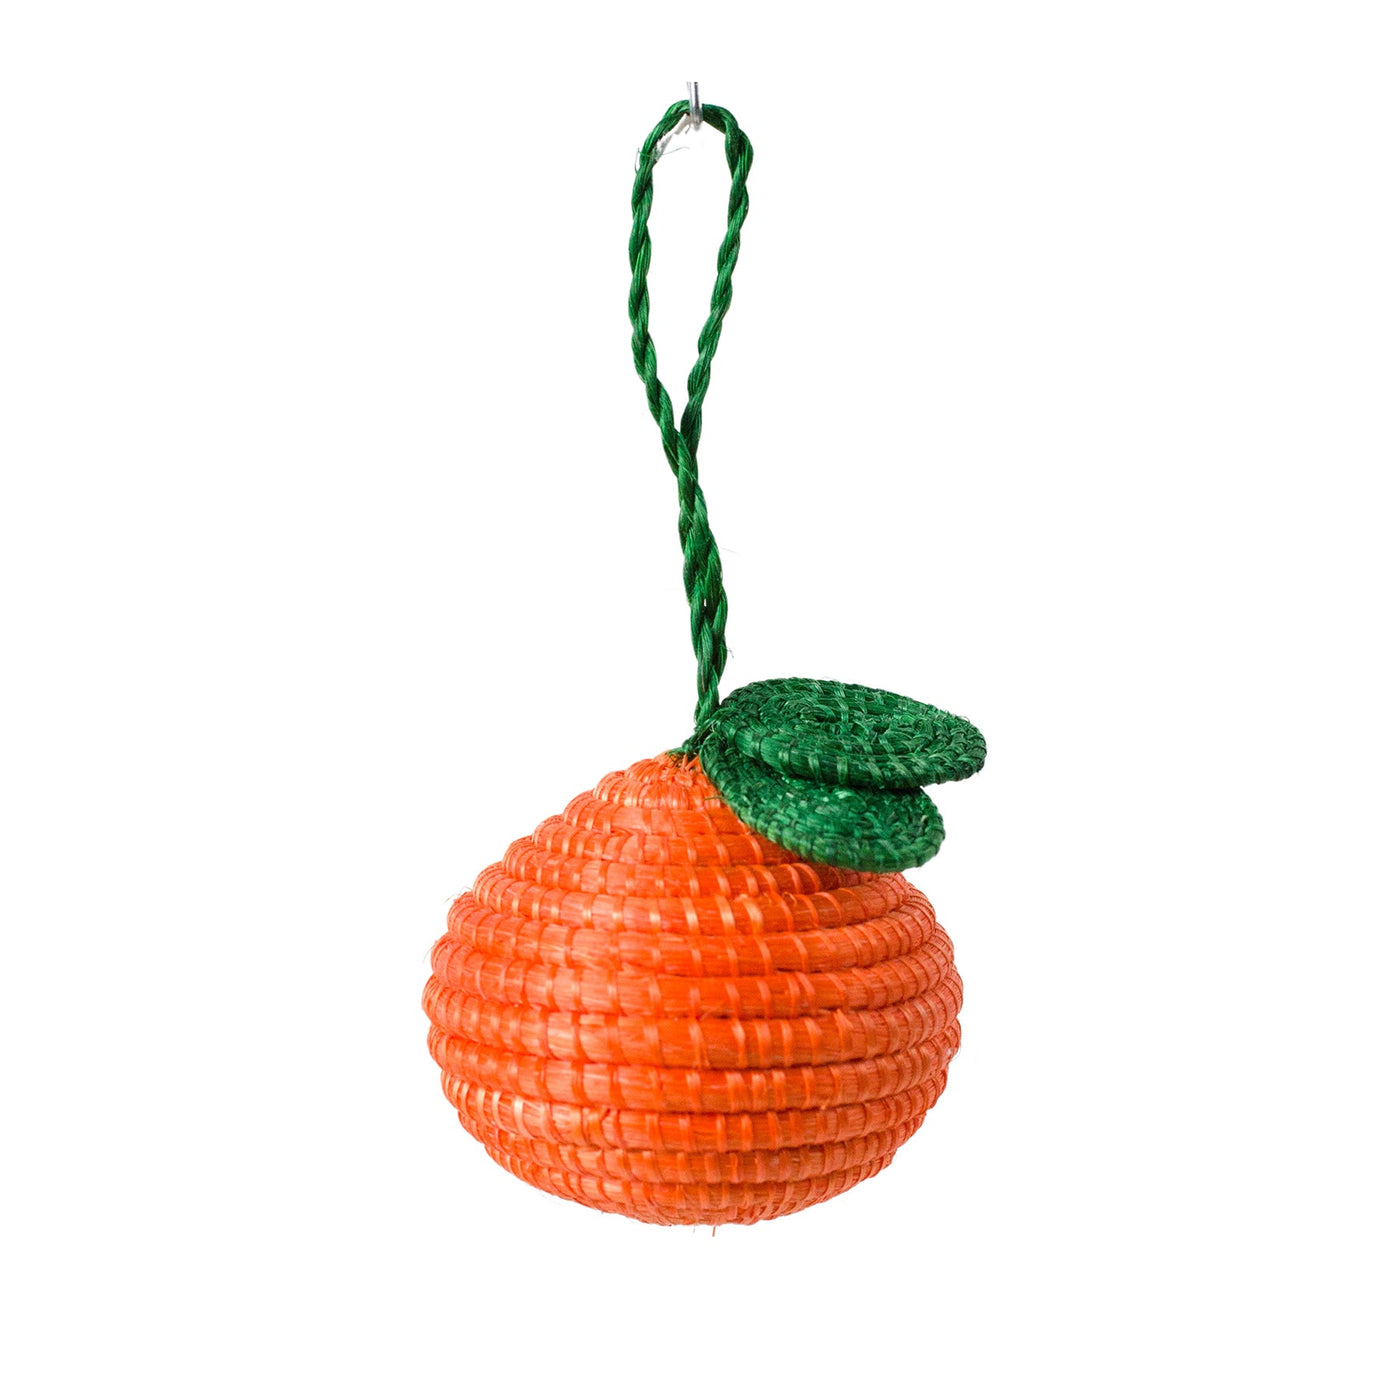 Tangerine Ornament